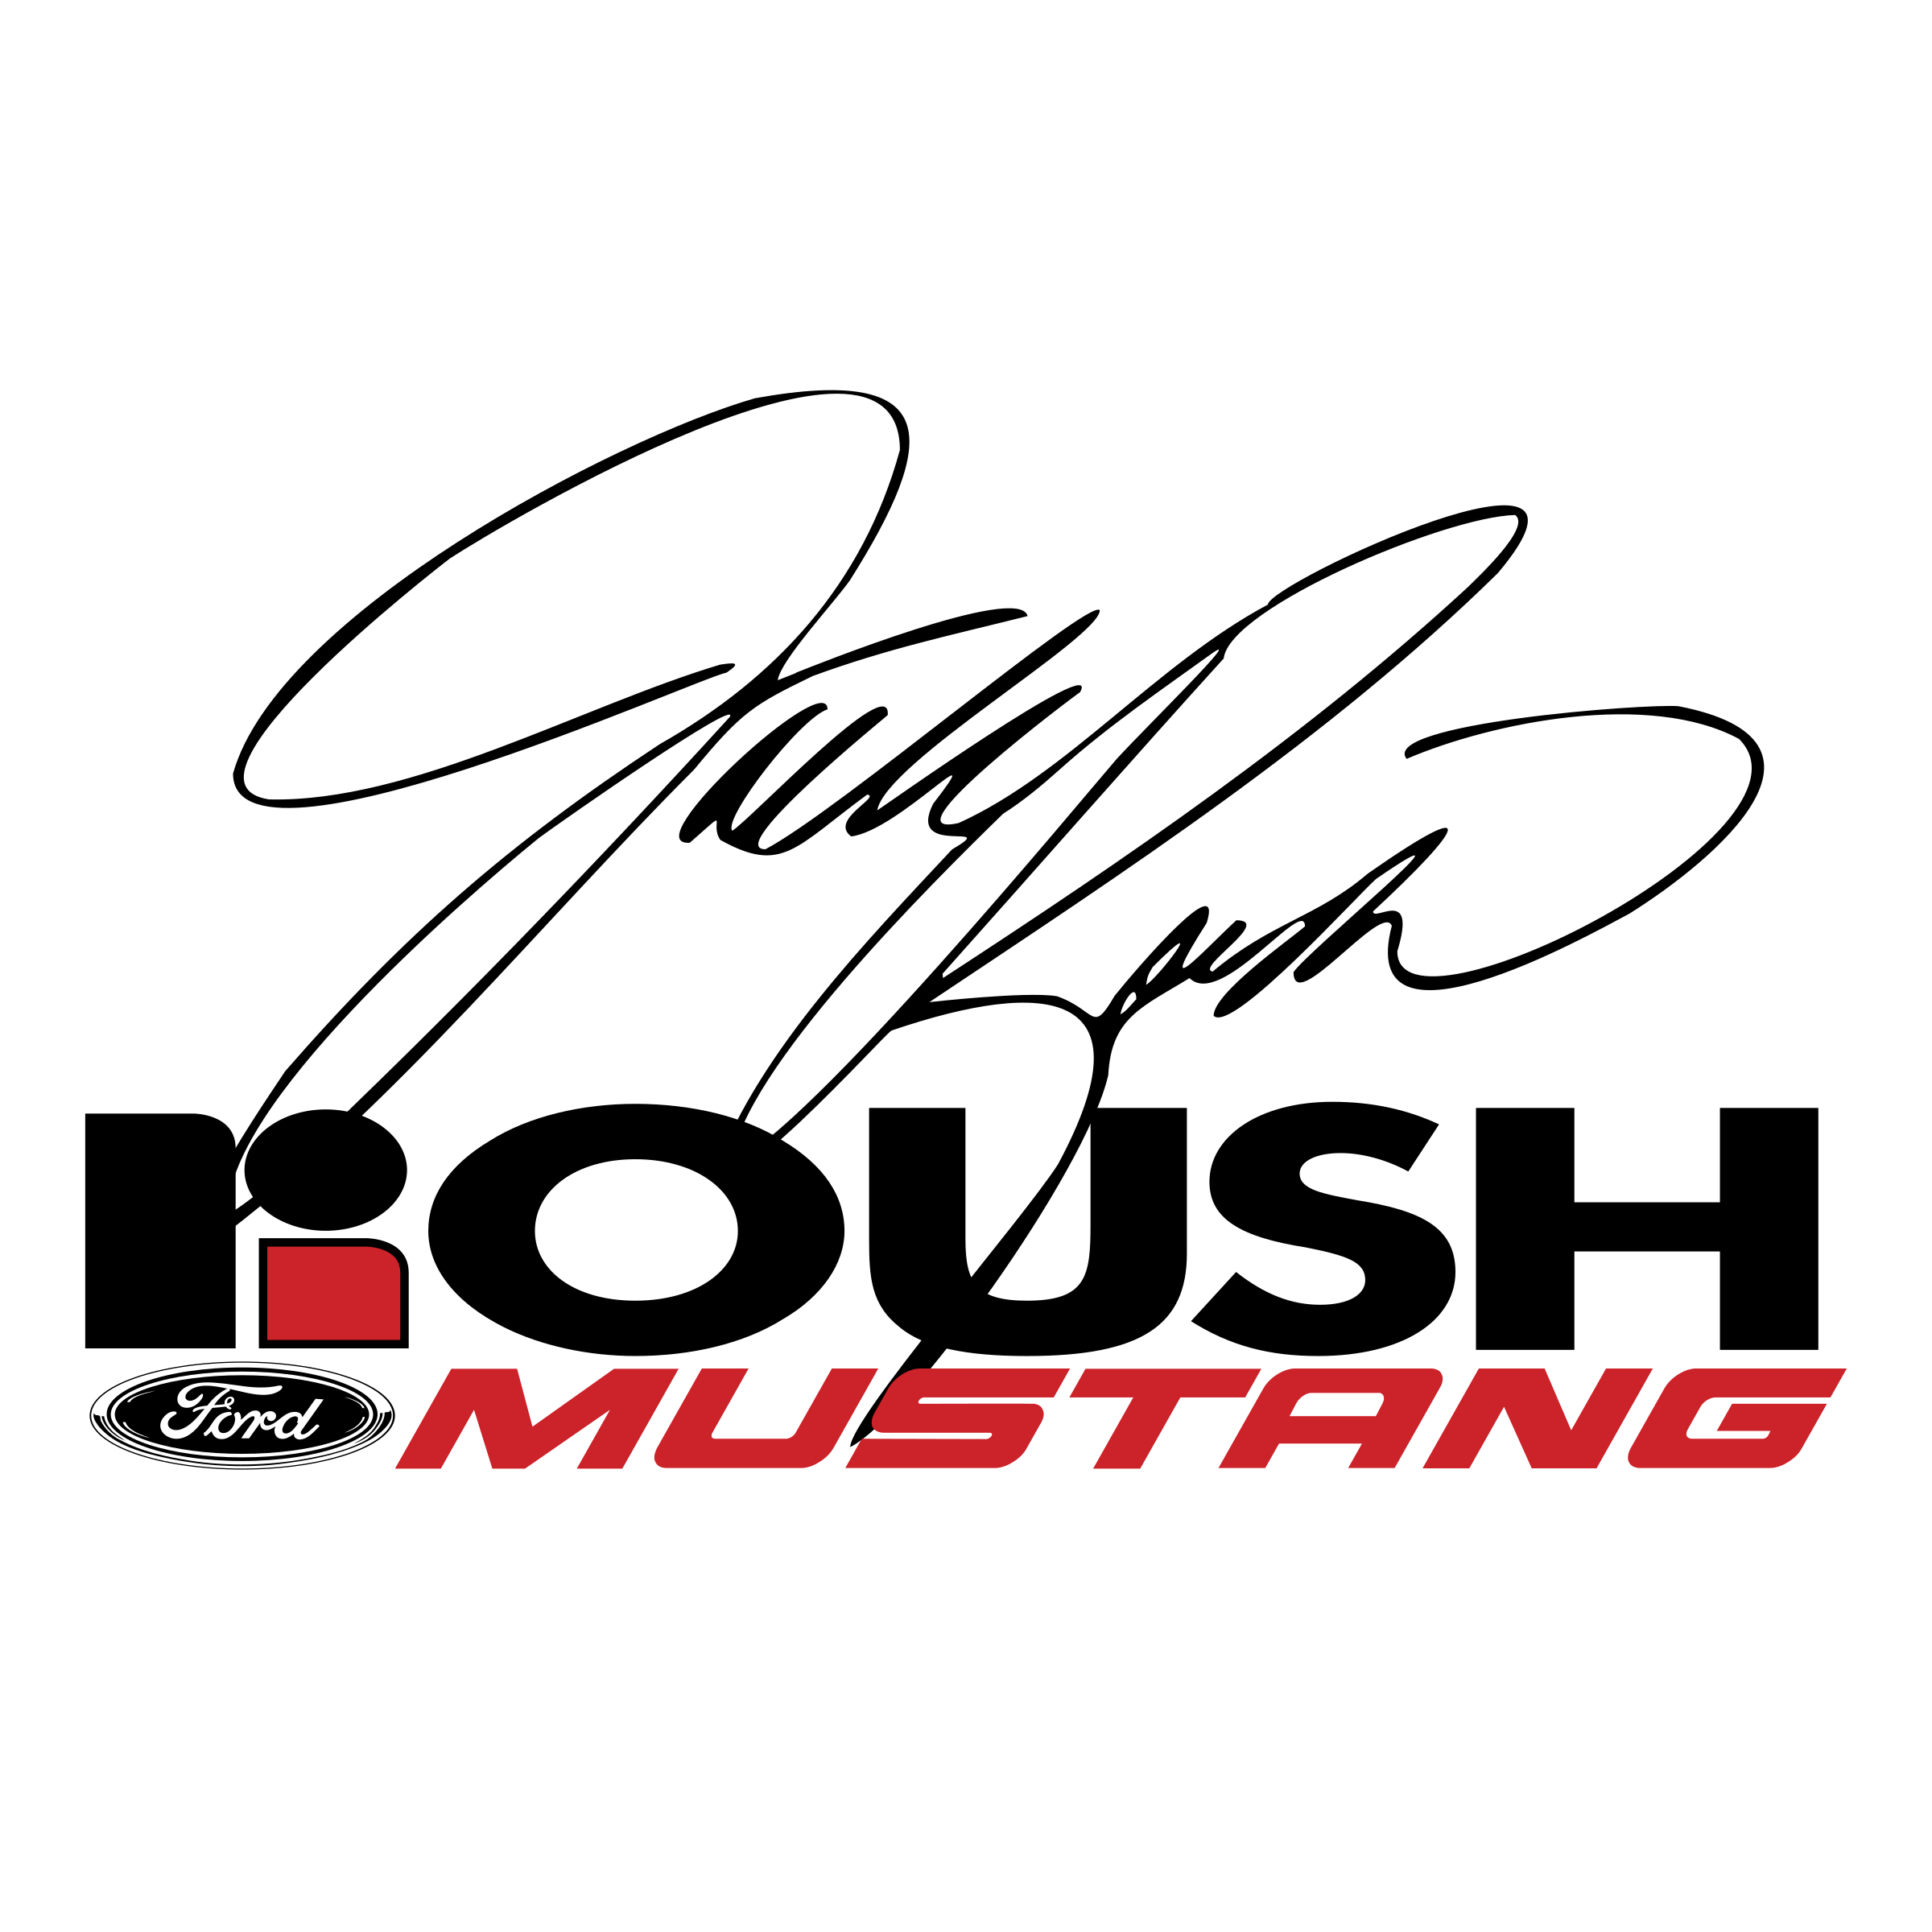 Roush Logo - Jack Roush Logo PNG Transparent & SVG Vector - Freebie Supply